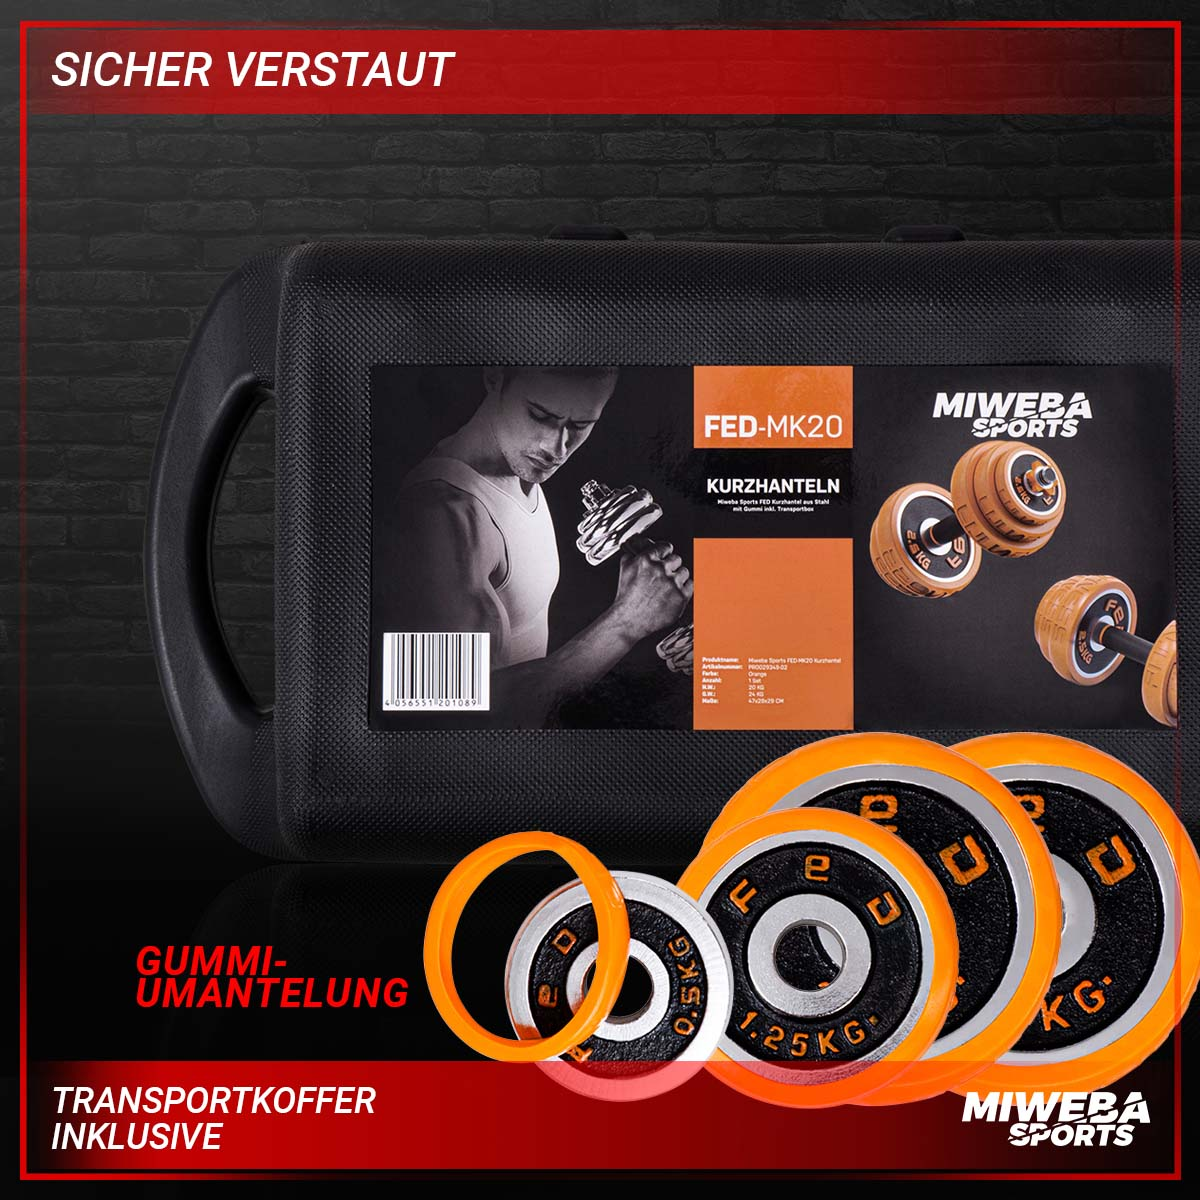 MIWEBA SPORTS 4in1 FED Kurzhantel, orange 30 Hanteln + Koffer kg Set